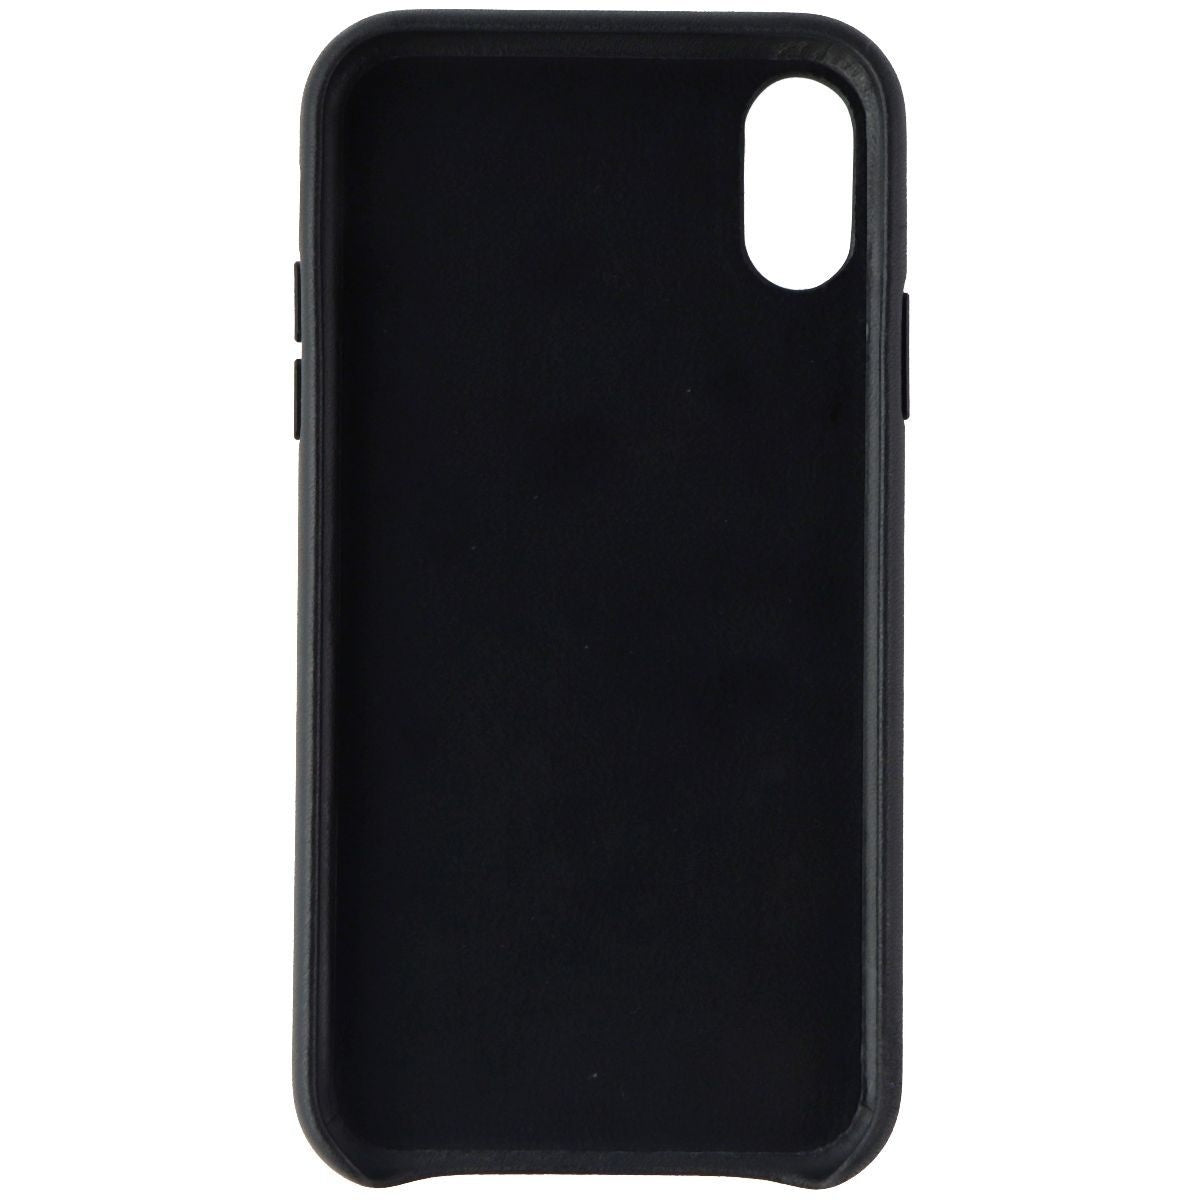 ERCKO Slim Magnet Case & Magnet Holder for Apple iPhone X - Black Cell Phone - Cases, Covers & Skins Ercko    - Simple Cell Bulk Wholesale Pricing - USA Seller